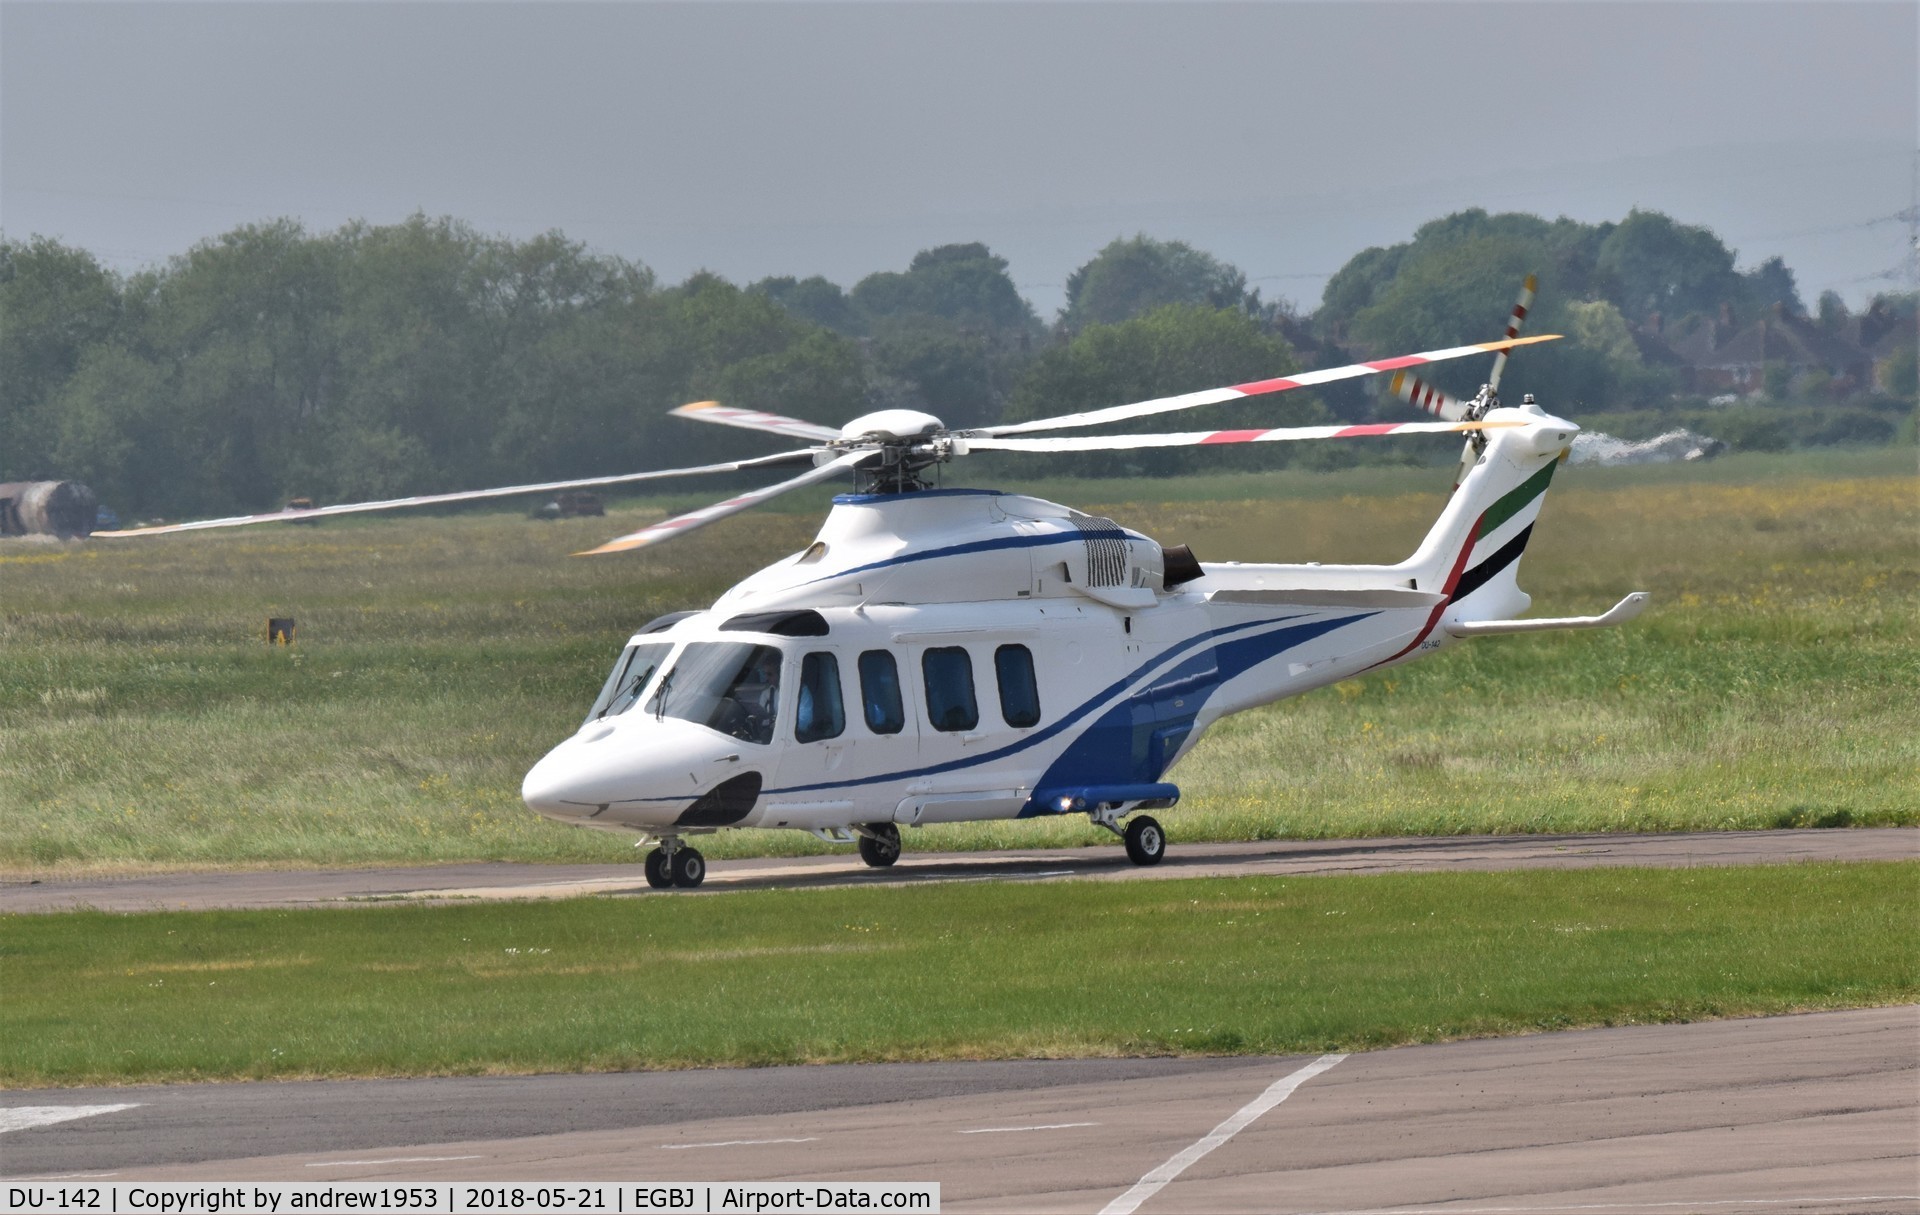 DU-142, AgustaWestland AW-139 C/N 31234, DU-142 at Gloucestershire Airport.